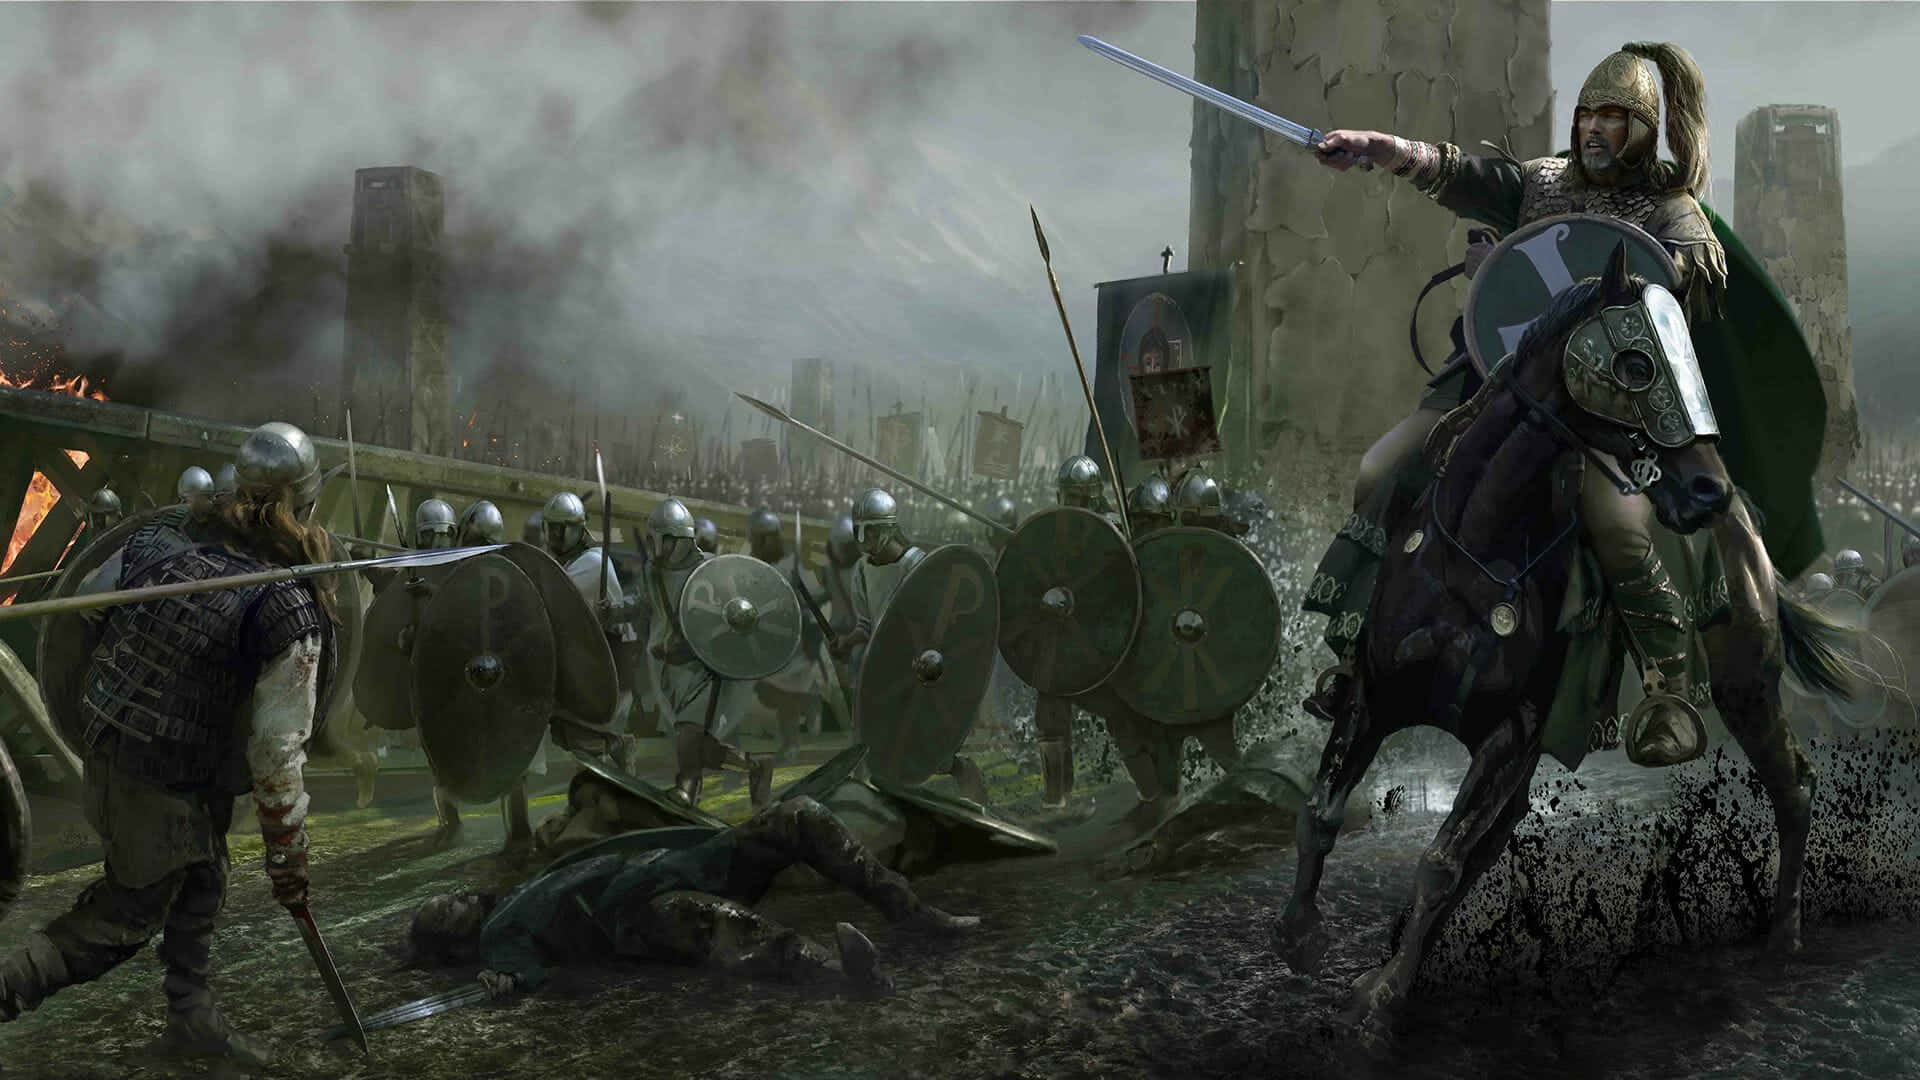 Epic Battle Scene From Attila Total War Game